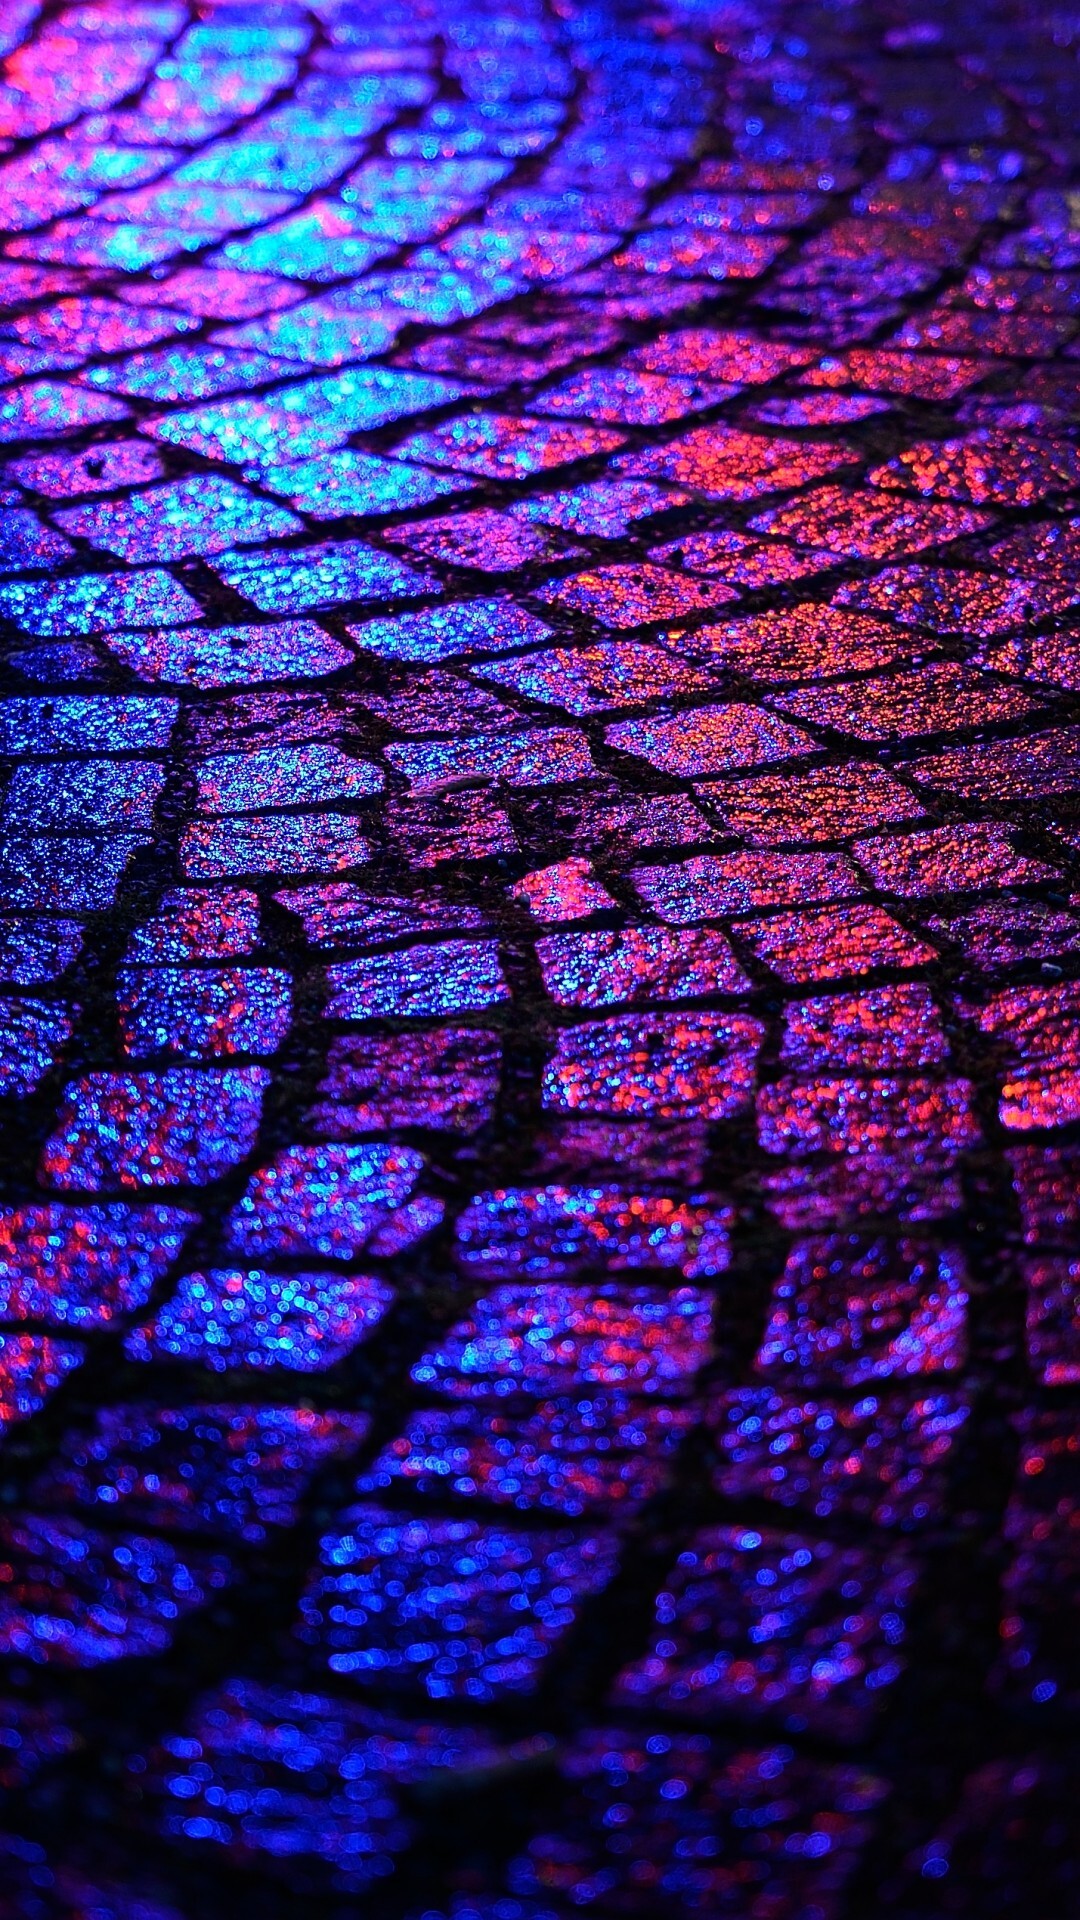 Glow in the Dark: Neon bricks, Glowing shades, Wet pave-way. 1080x1920 Full HD Wallpaper.